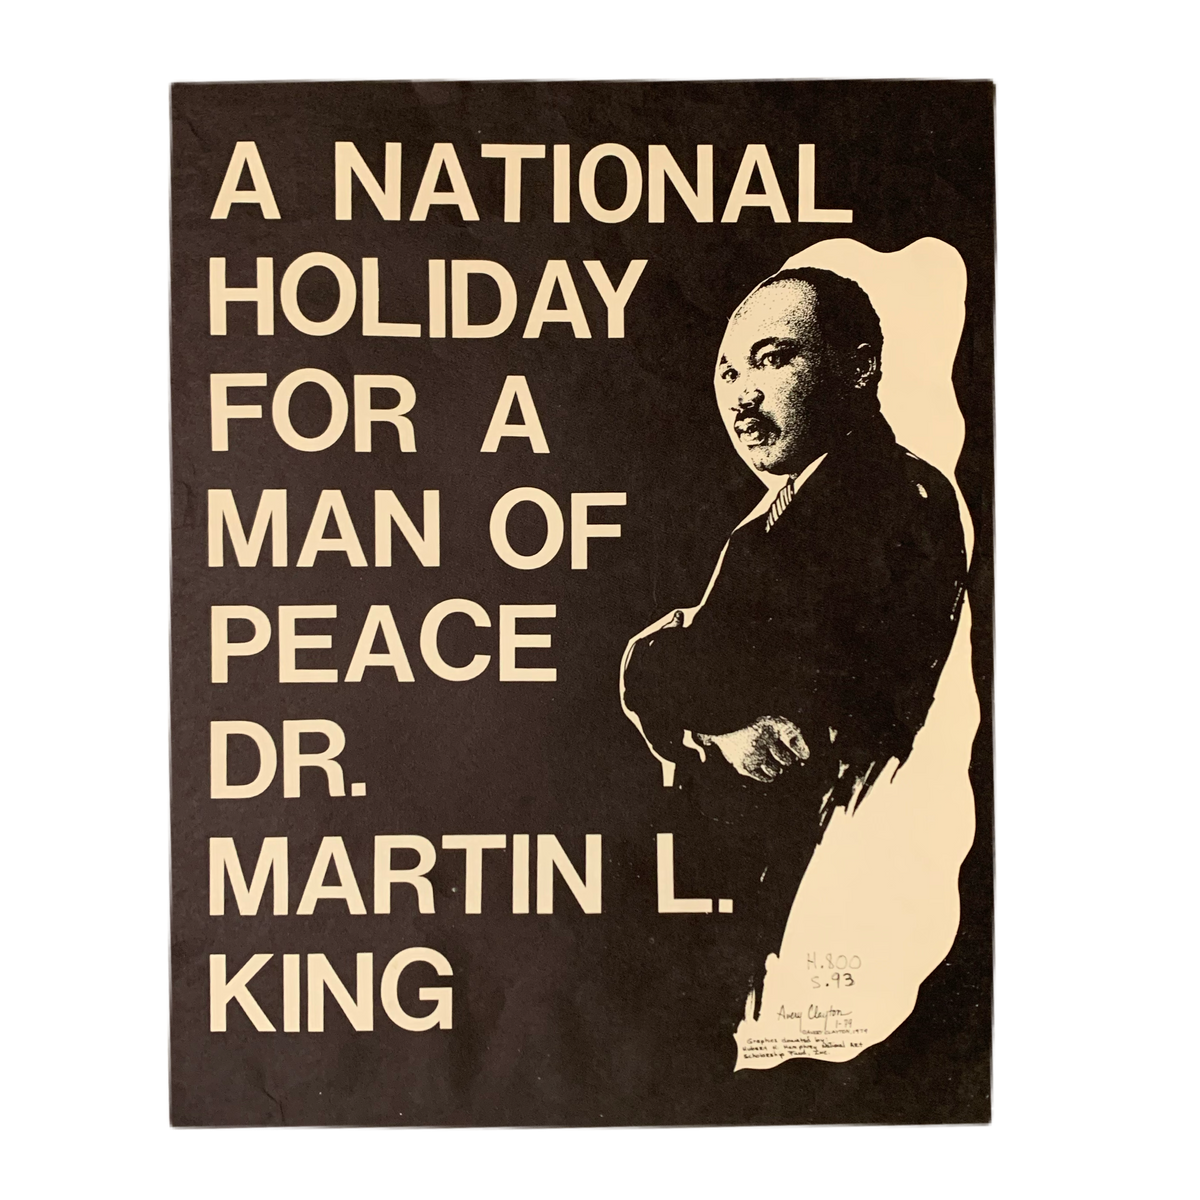 Vintage Martin Luther King, Jr. “Avery Clayton” Poster - jointcustodydc